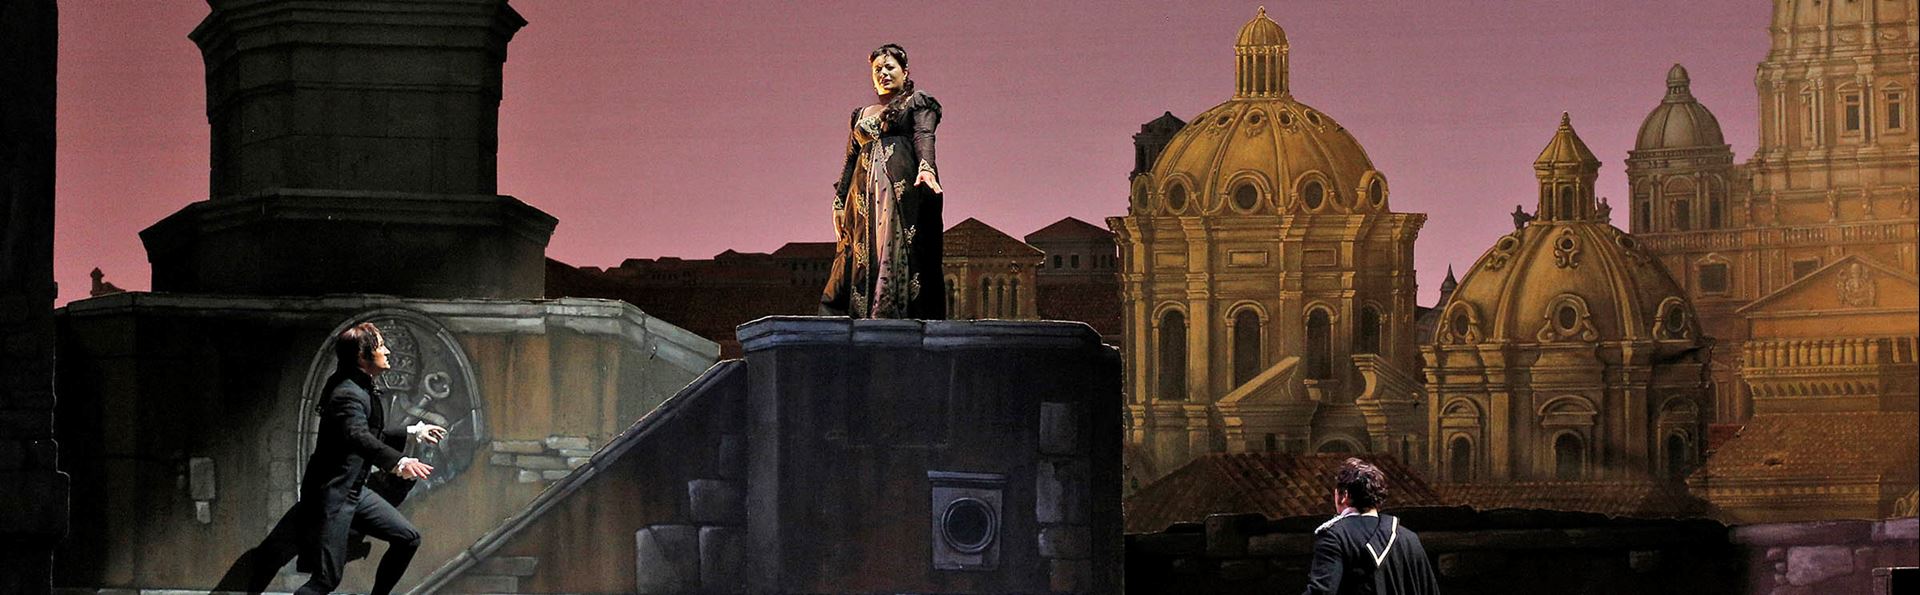 Tosca Italian Opera